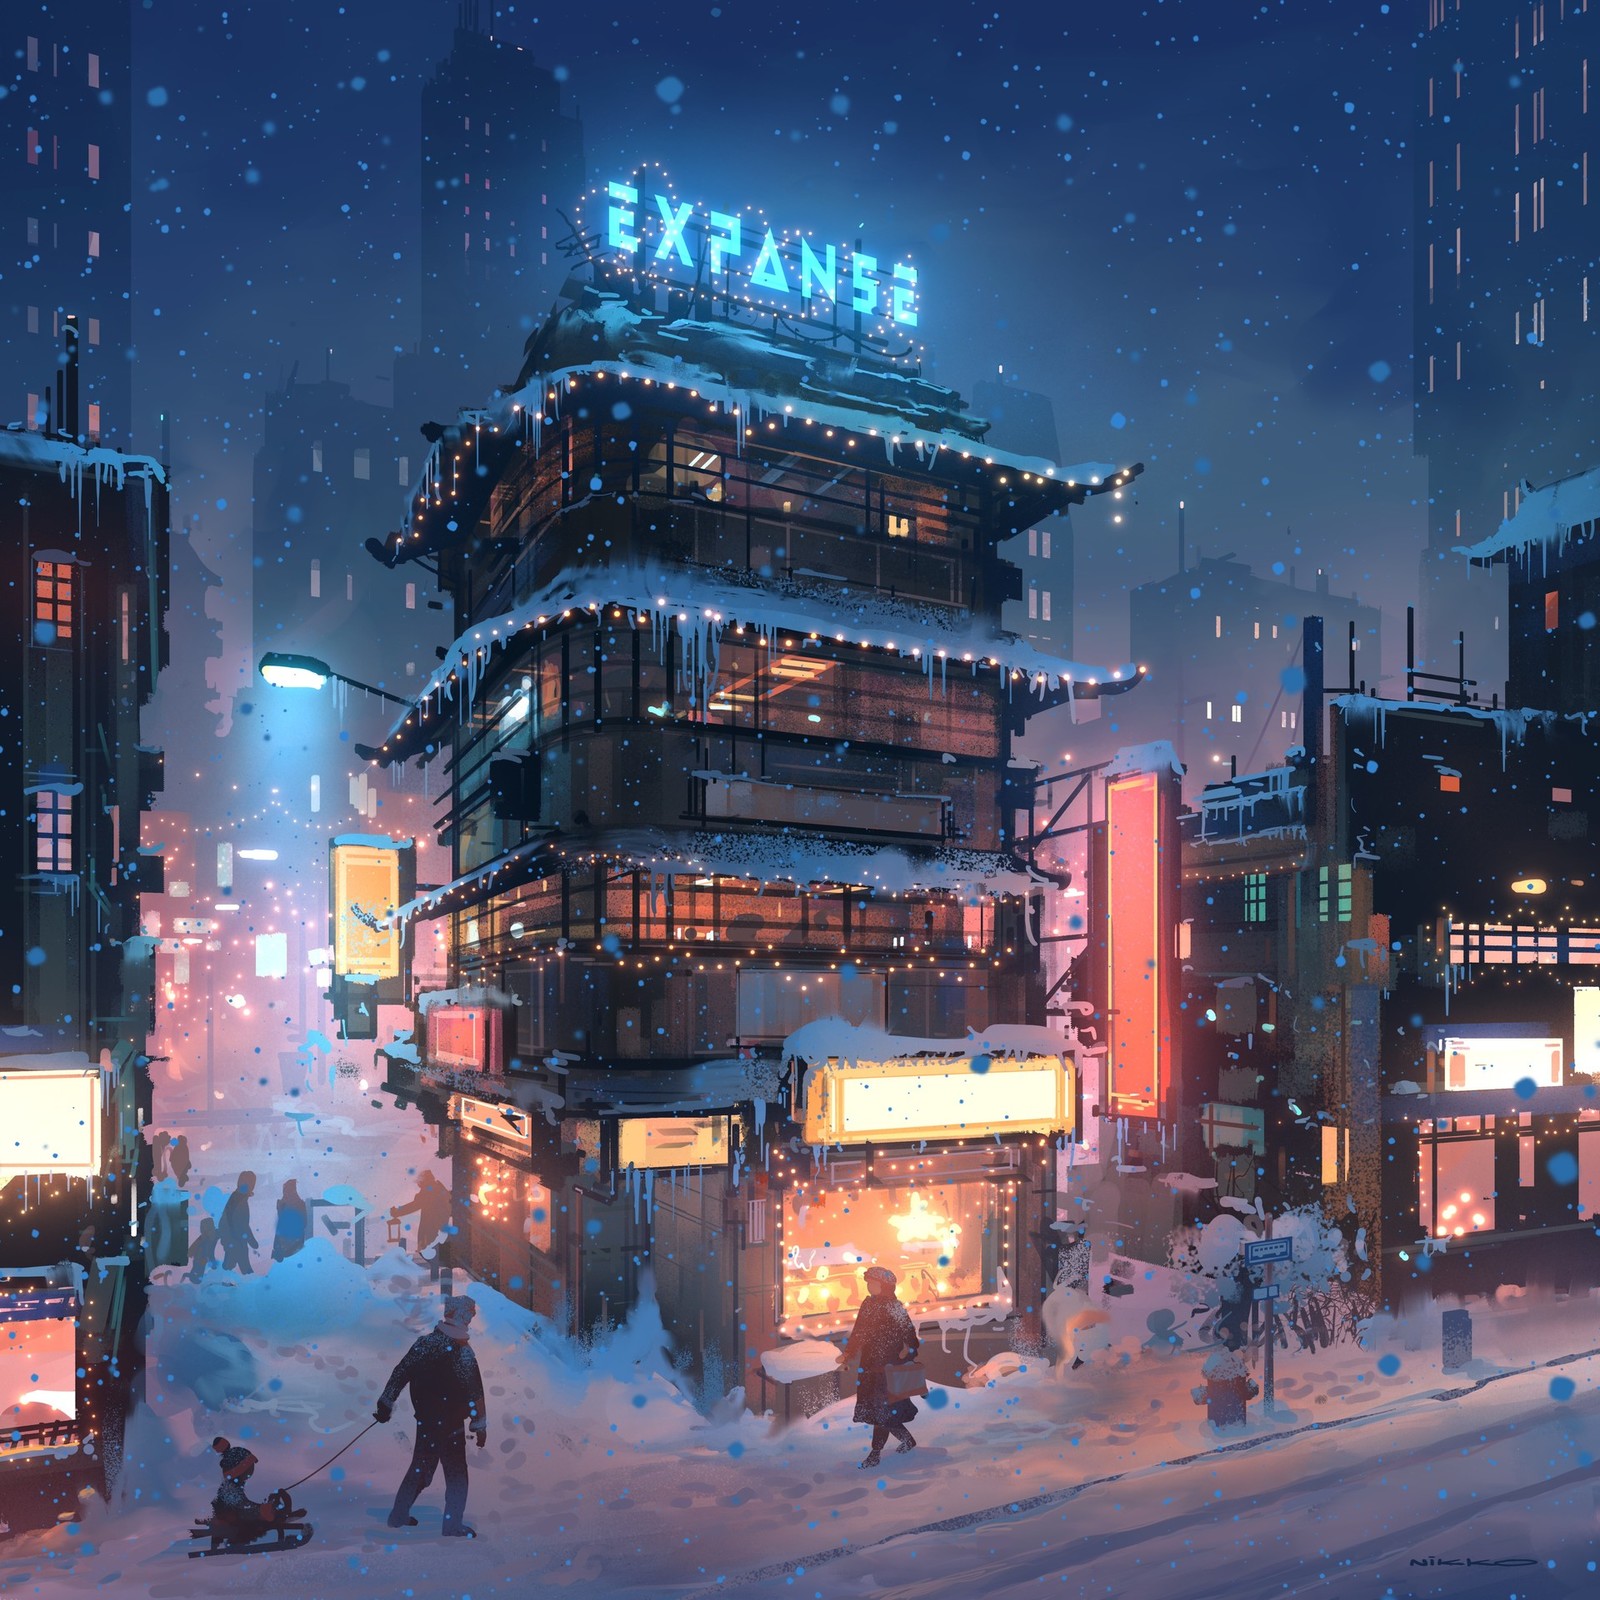 At Christmas. - Christmas, The street, Town, Snow, Digital, Nikolai Lockertsen